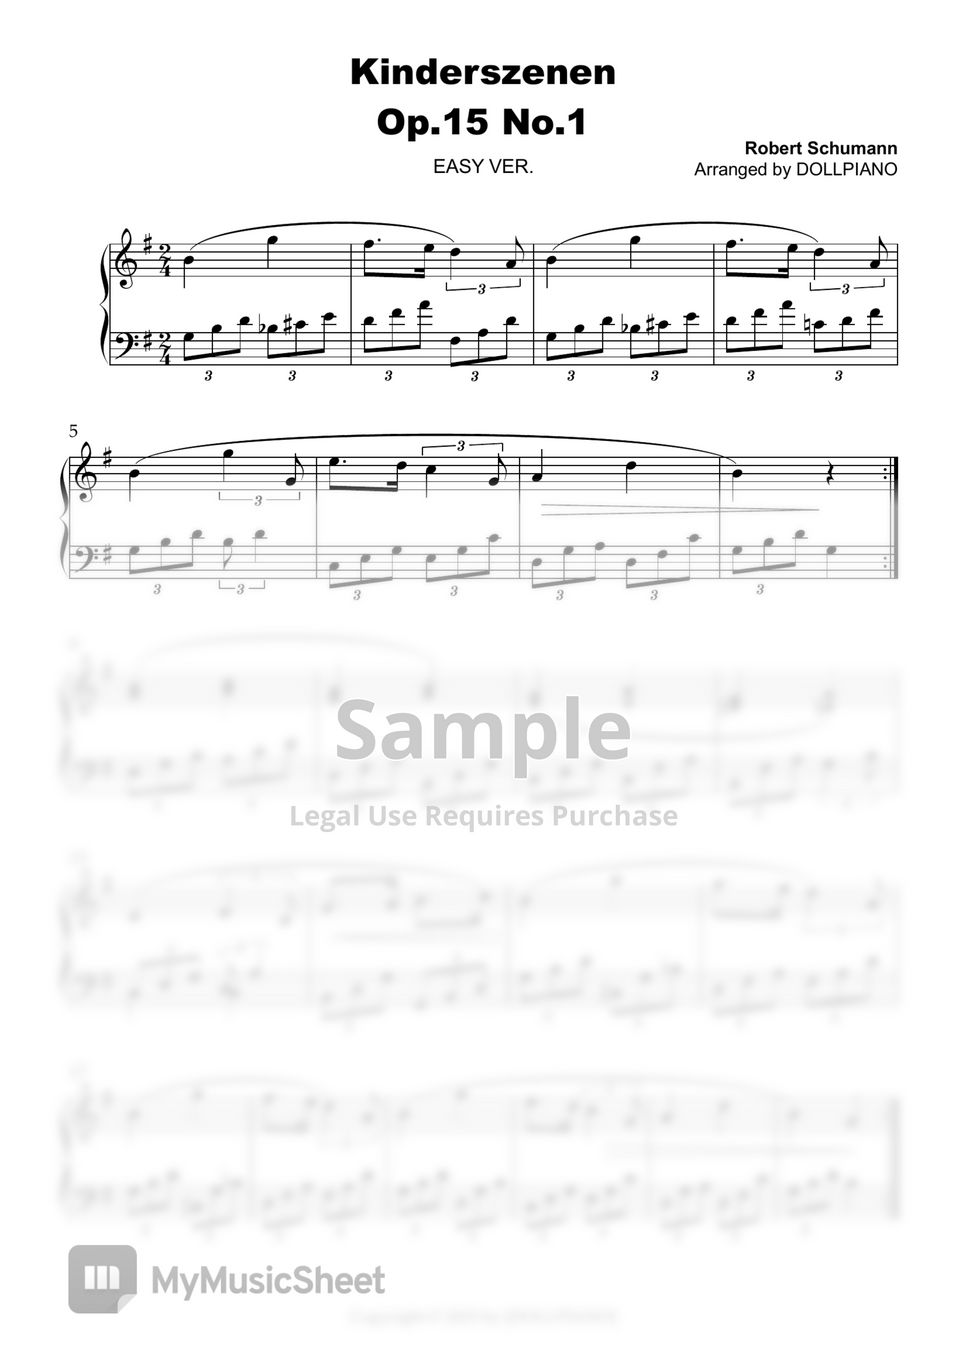 Robert Schumann - Kinderszenen Op.15 (Easy ver. for small hands) by DOLLPIANO